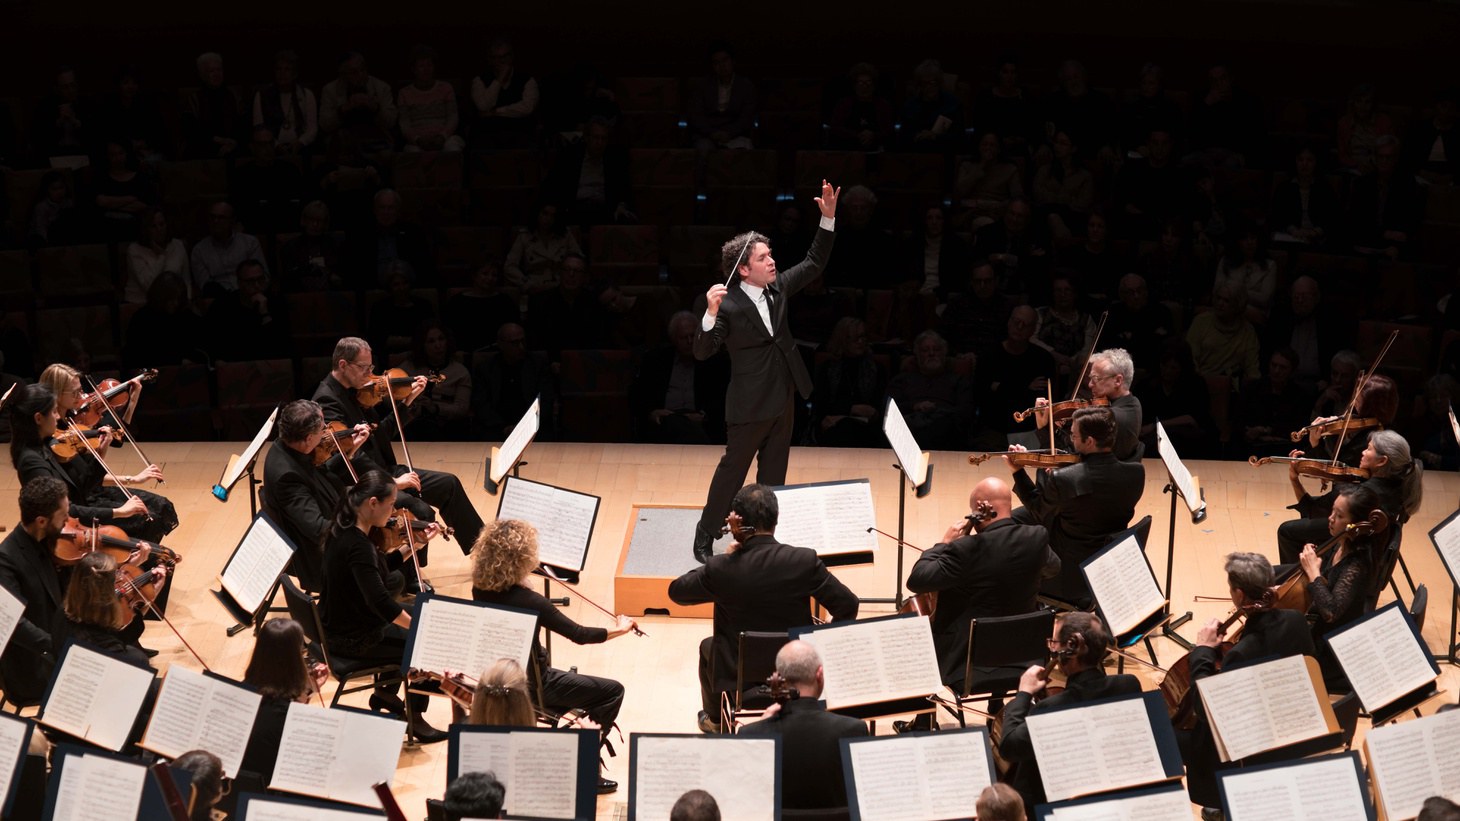 Gustavo Dudamel to Los Angeles for New York Philharmonic : NPR